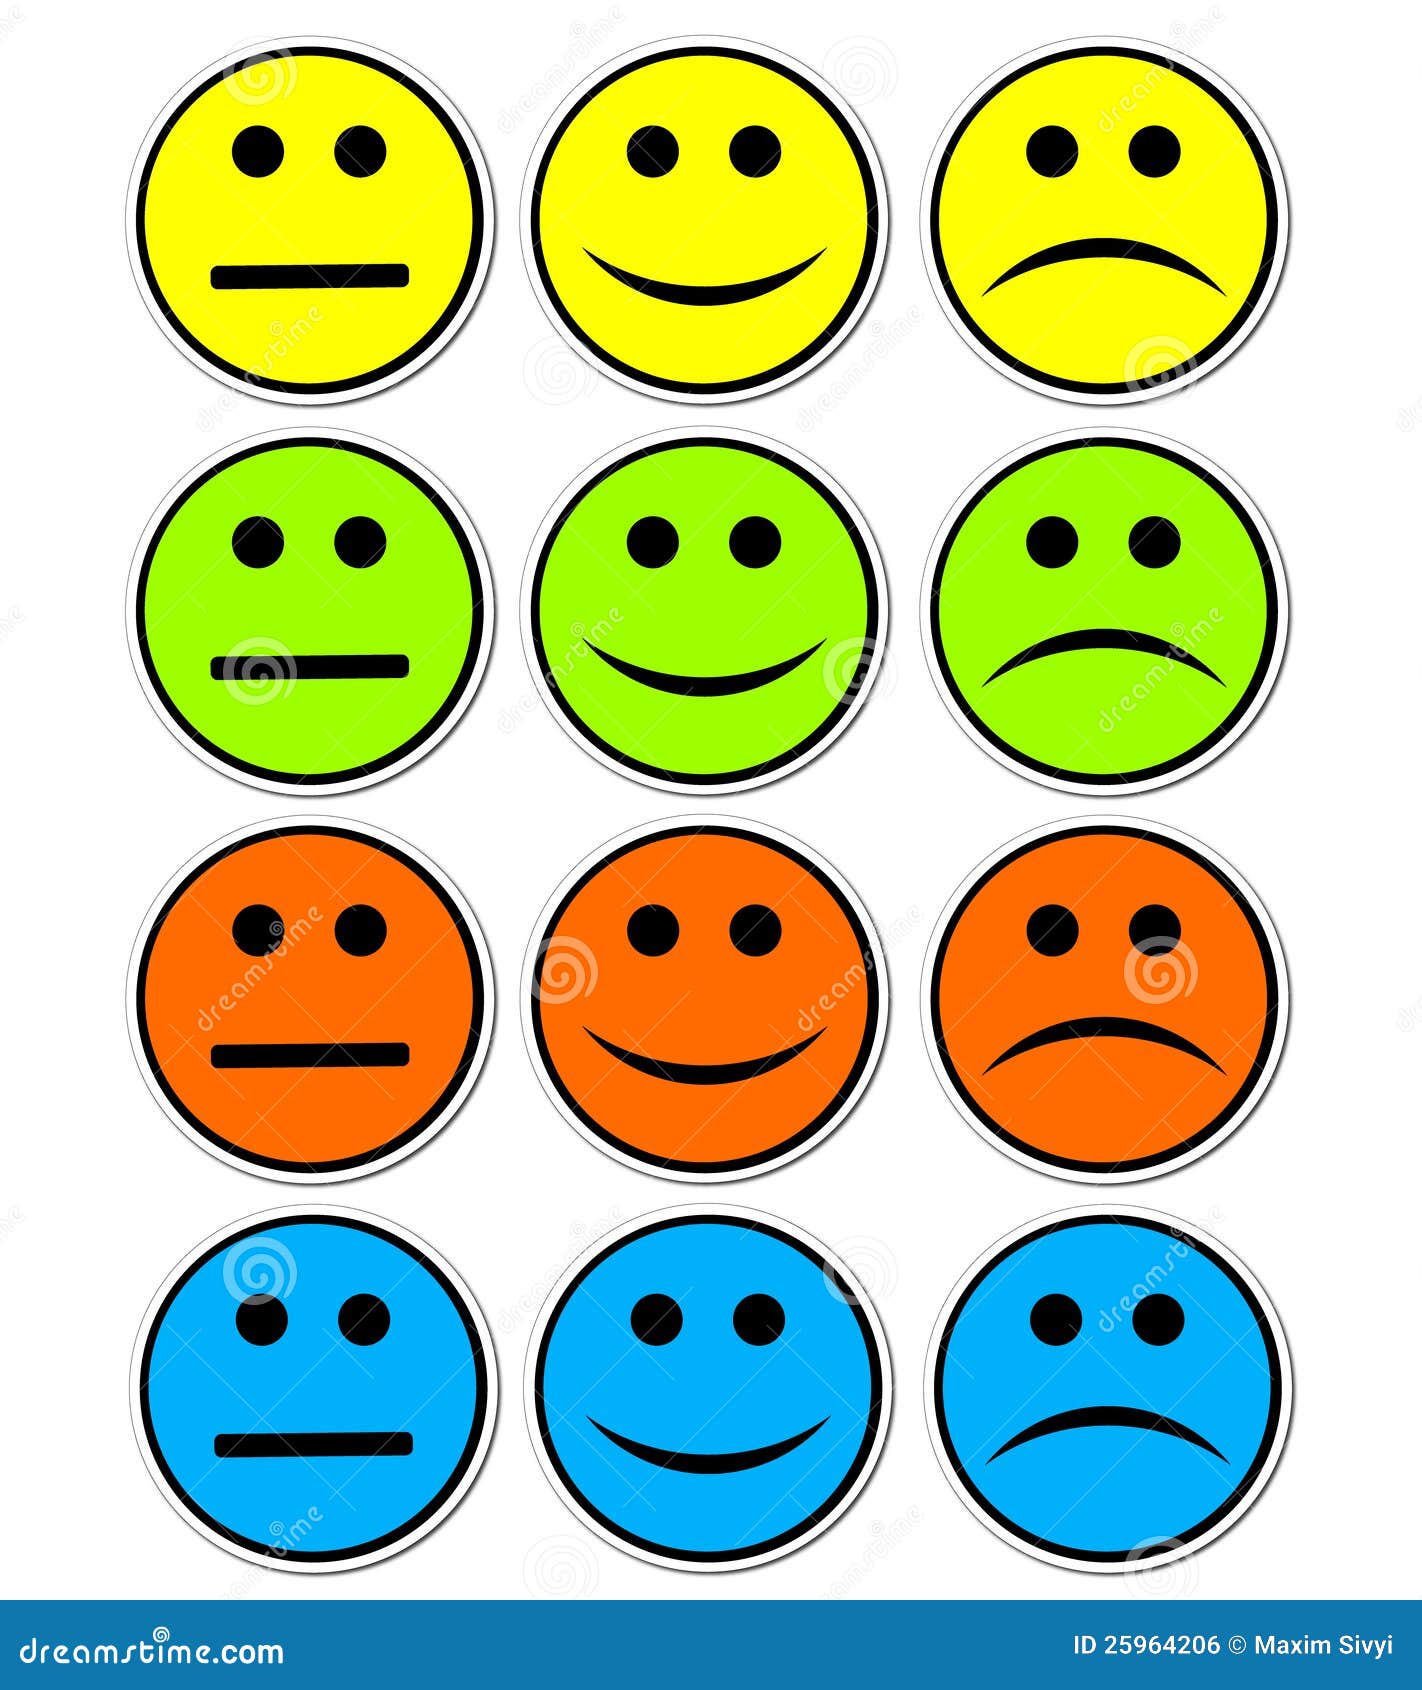 Three emotions sticker pack